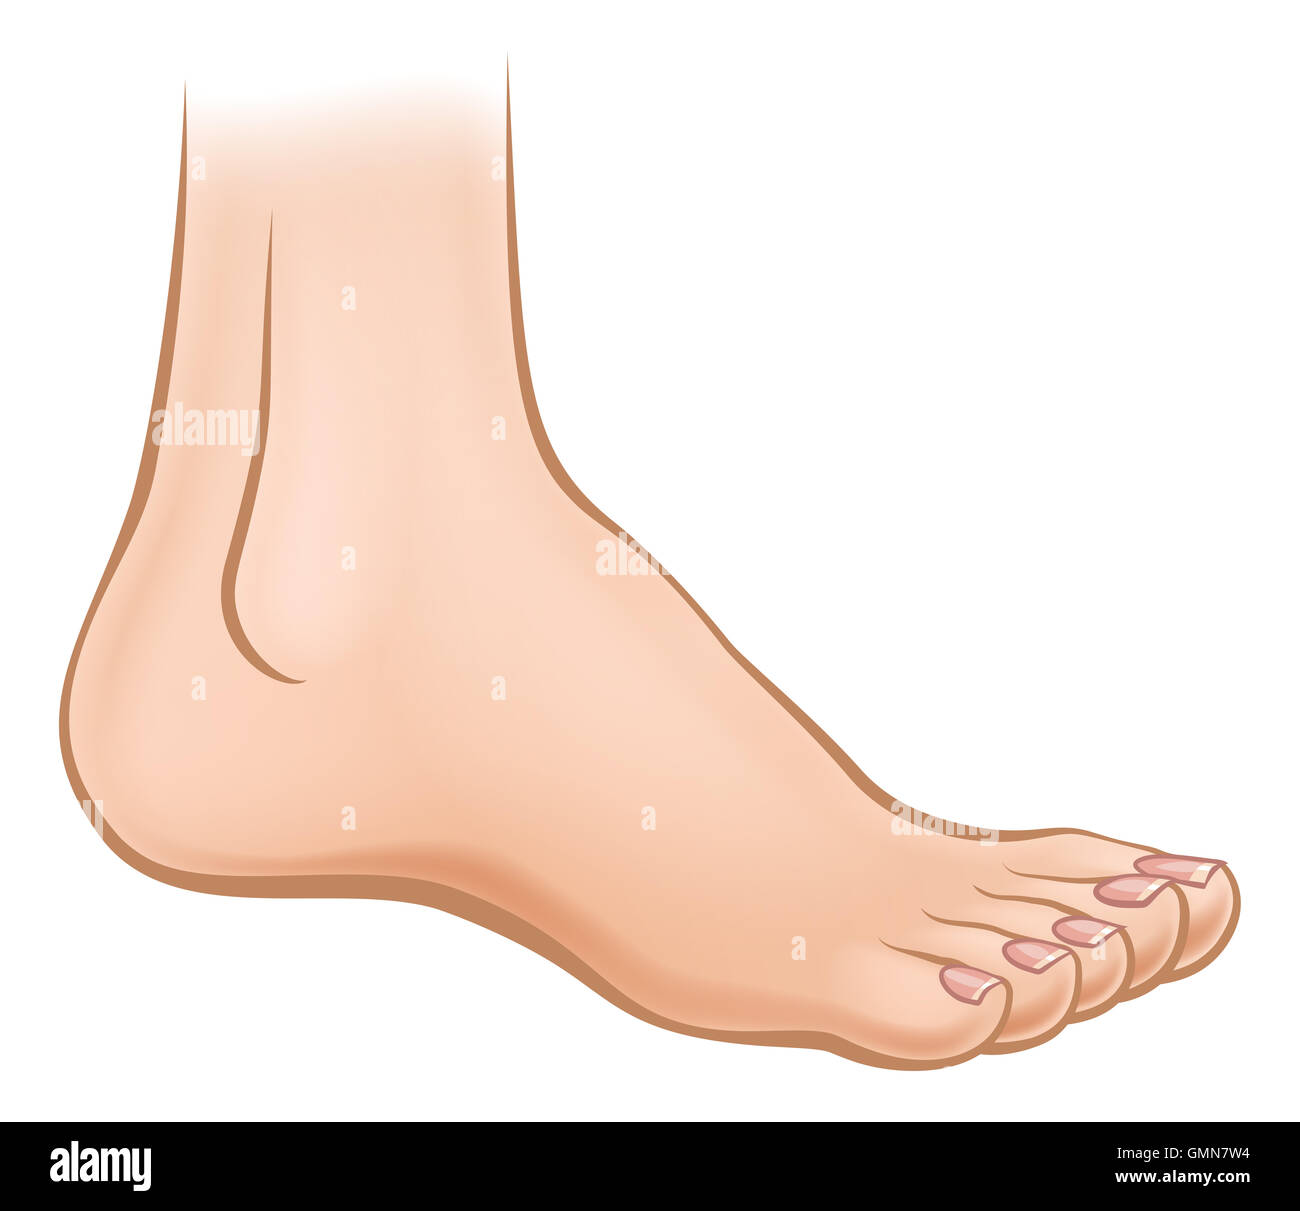 An illustration of a cartoon human foot Stock Photo